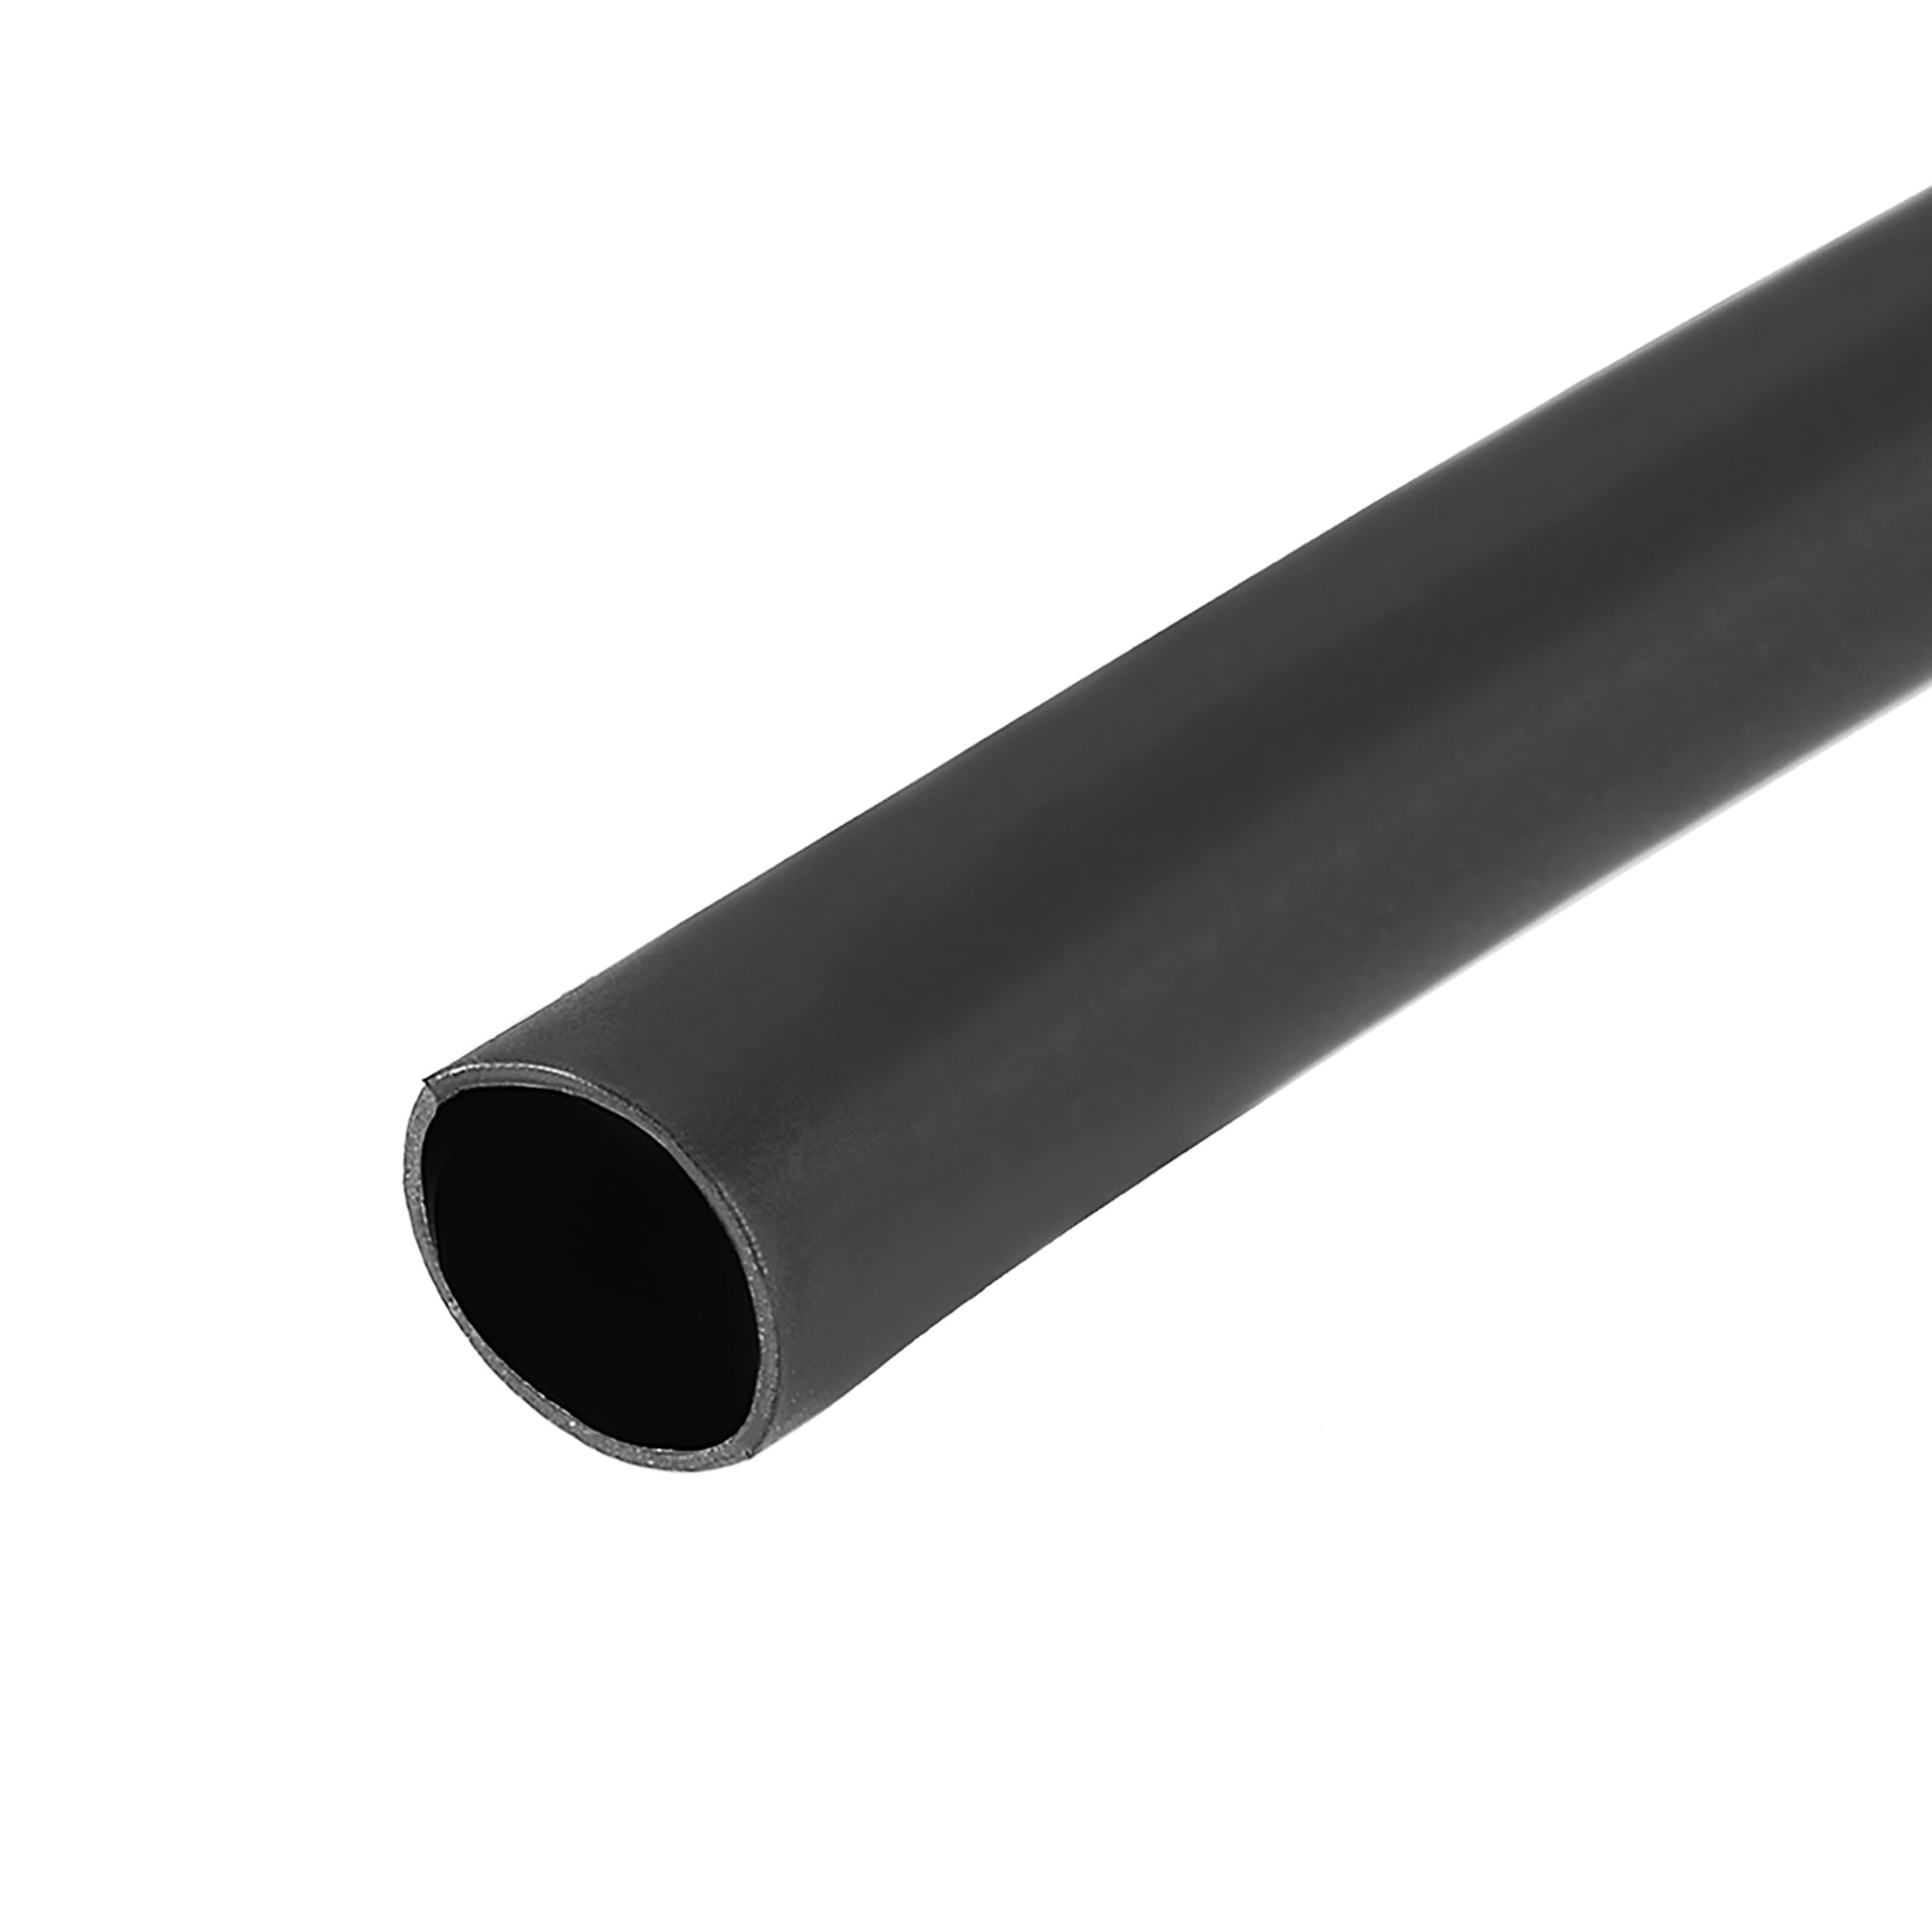 Heat Shrink Tubing Sleeve Wrap Black & Red 4.8mm x 2.4 metres Total. 